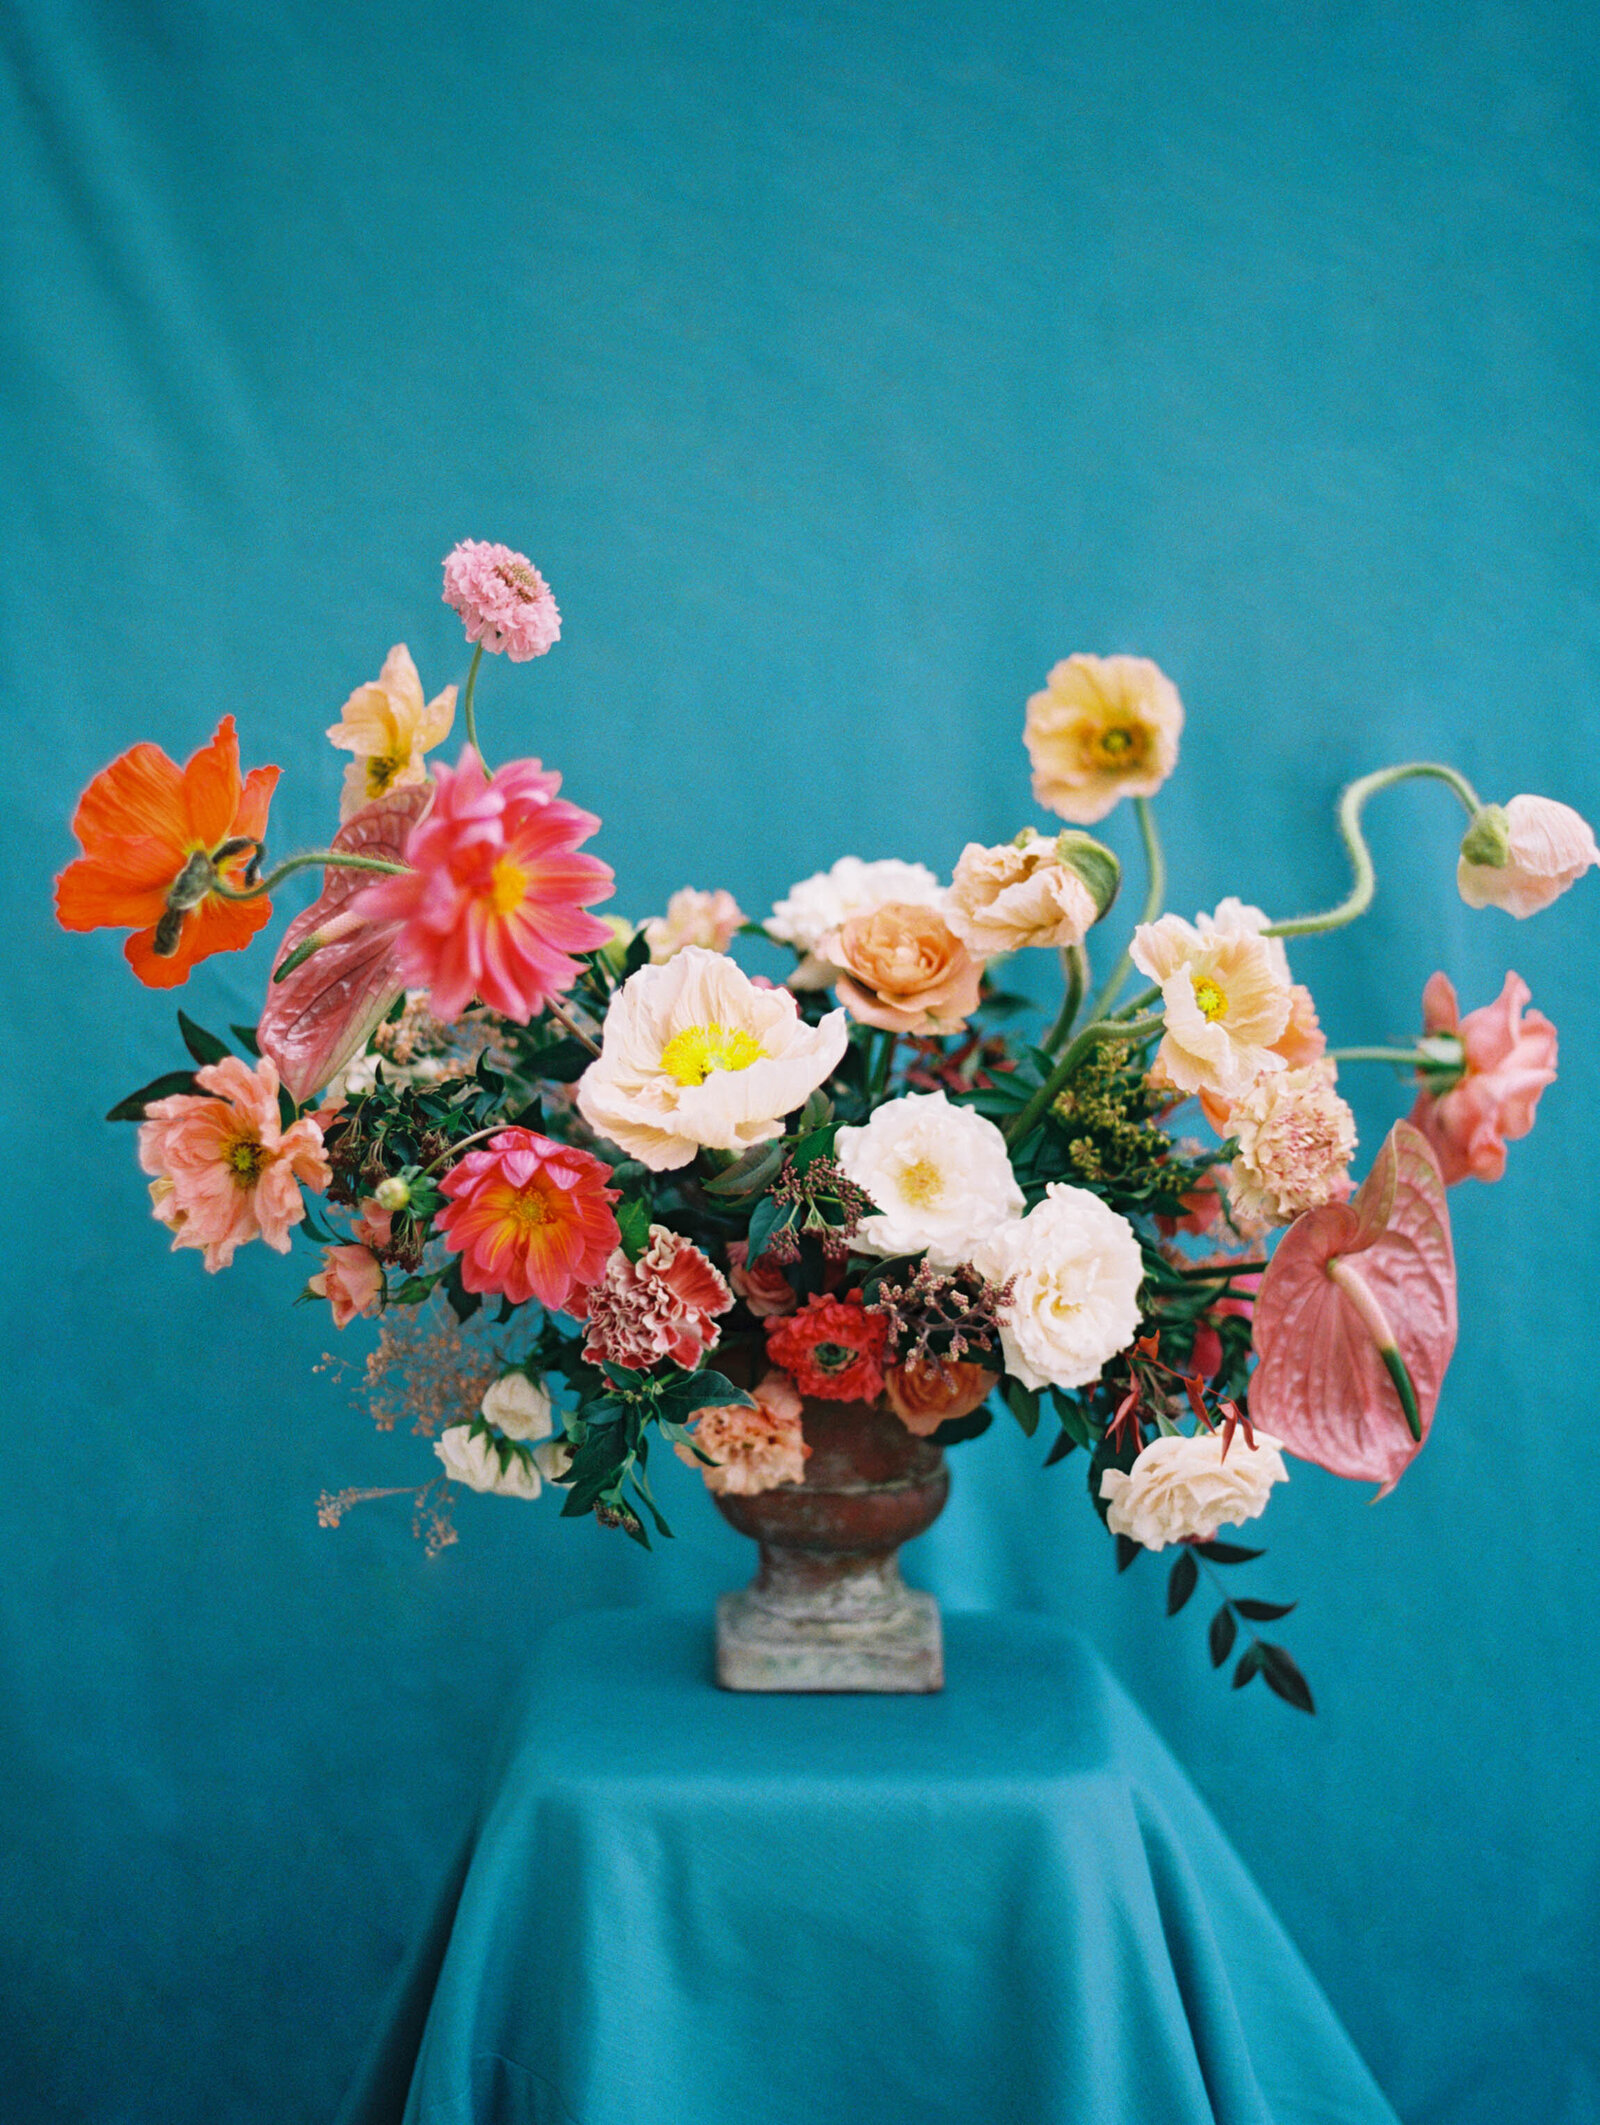 max-owens-design-at-home-floral-arrangements-23-poppies